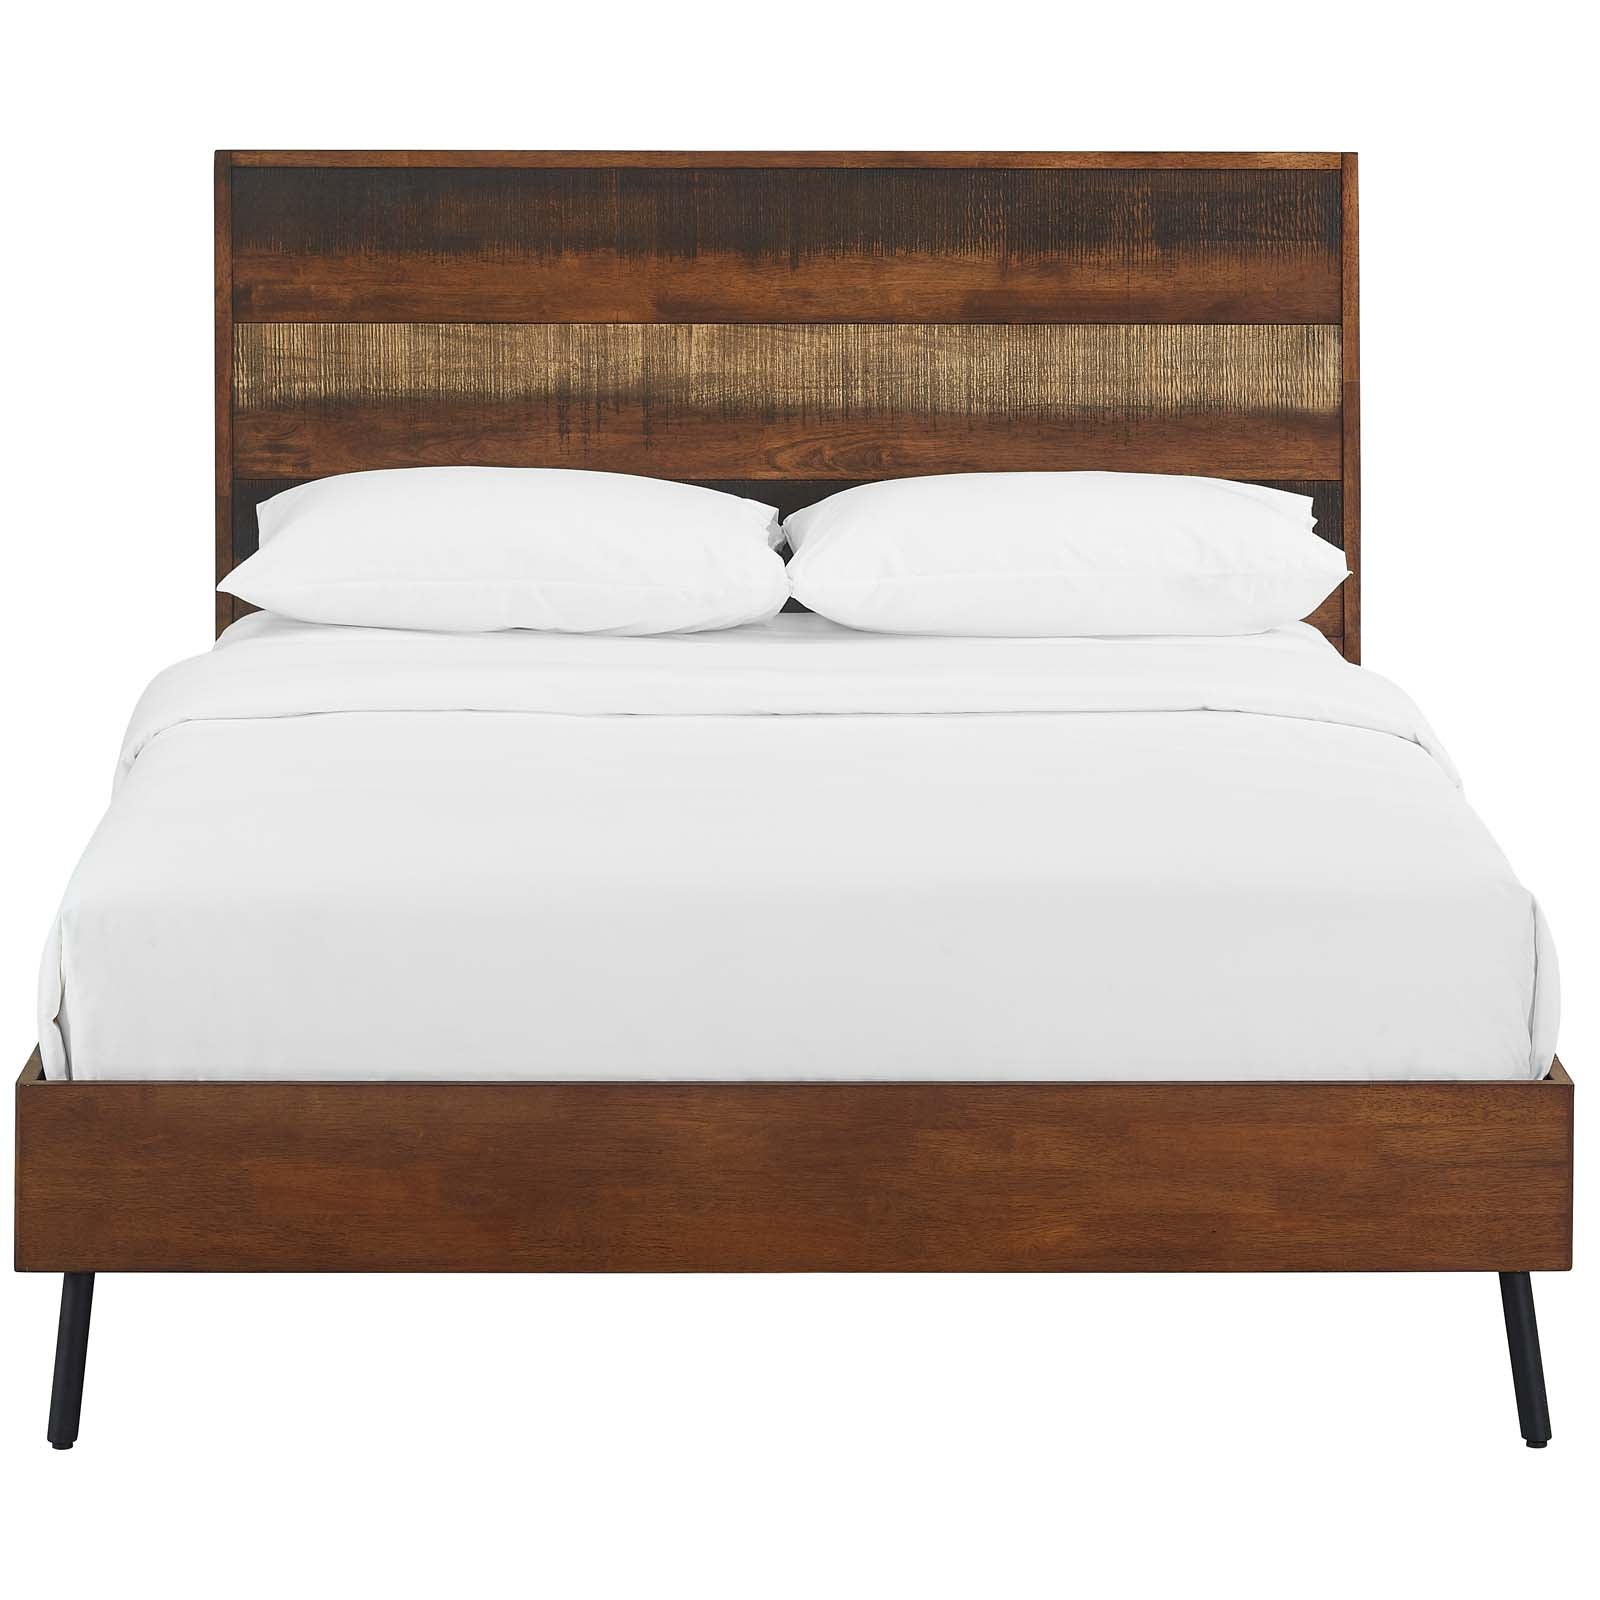 Modway Beds - Arwen Queen Rustic Wood Bed Walnut